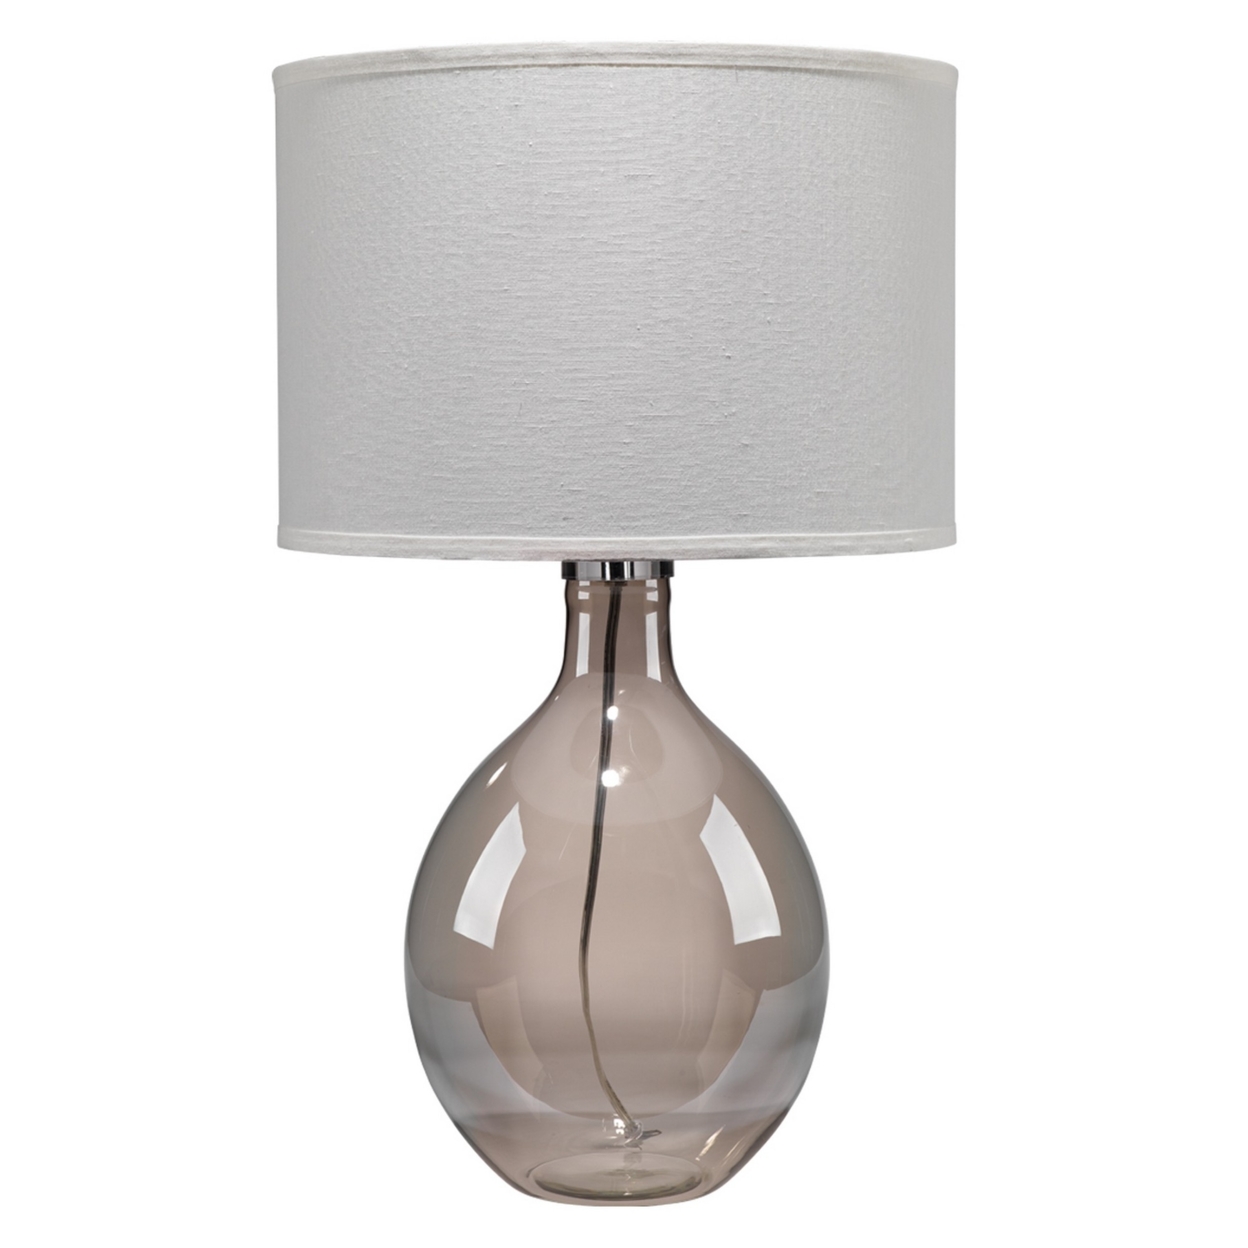 Table Lamp with Pot Bellied Glass Base, Light Gray- Saltoro Sherpi